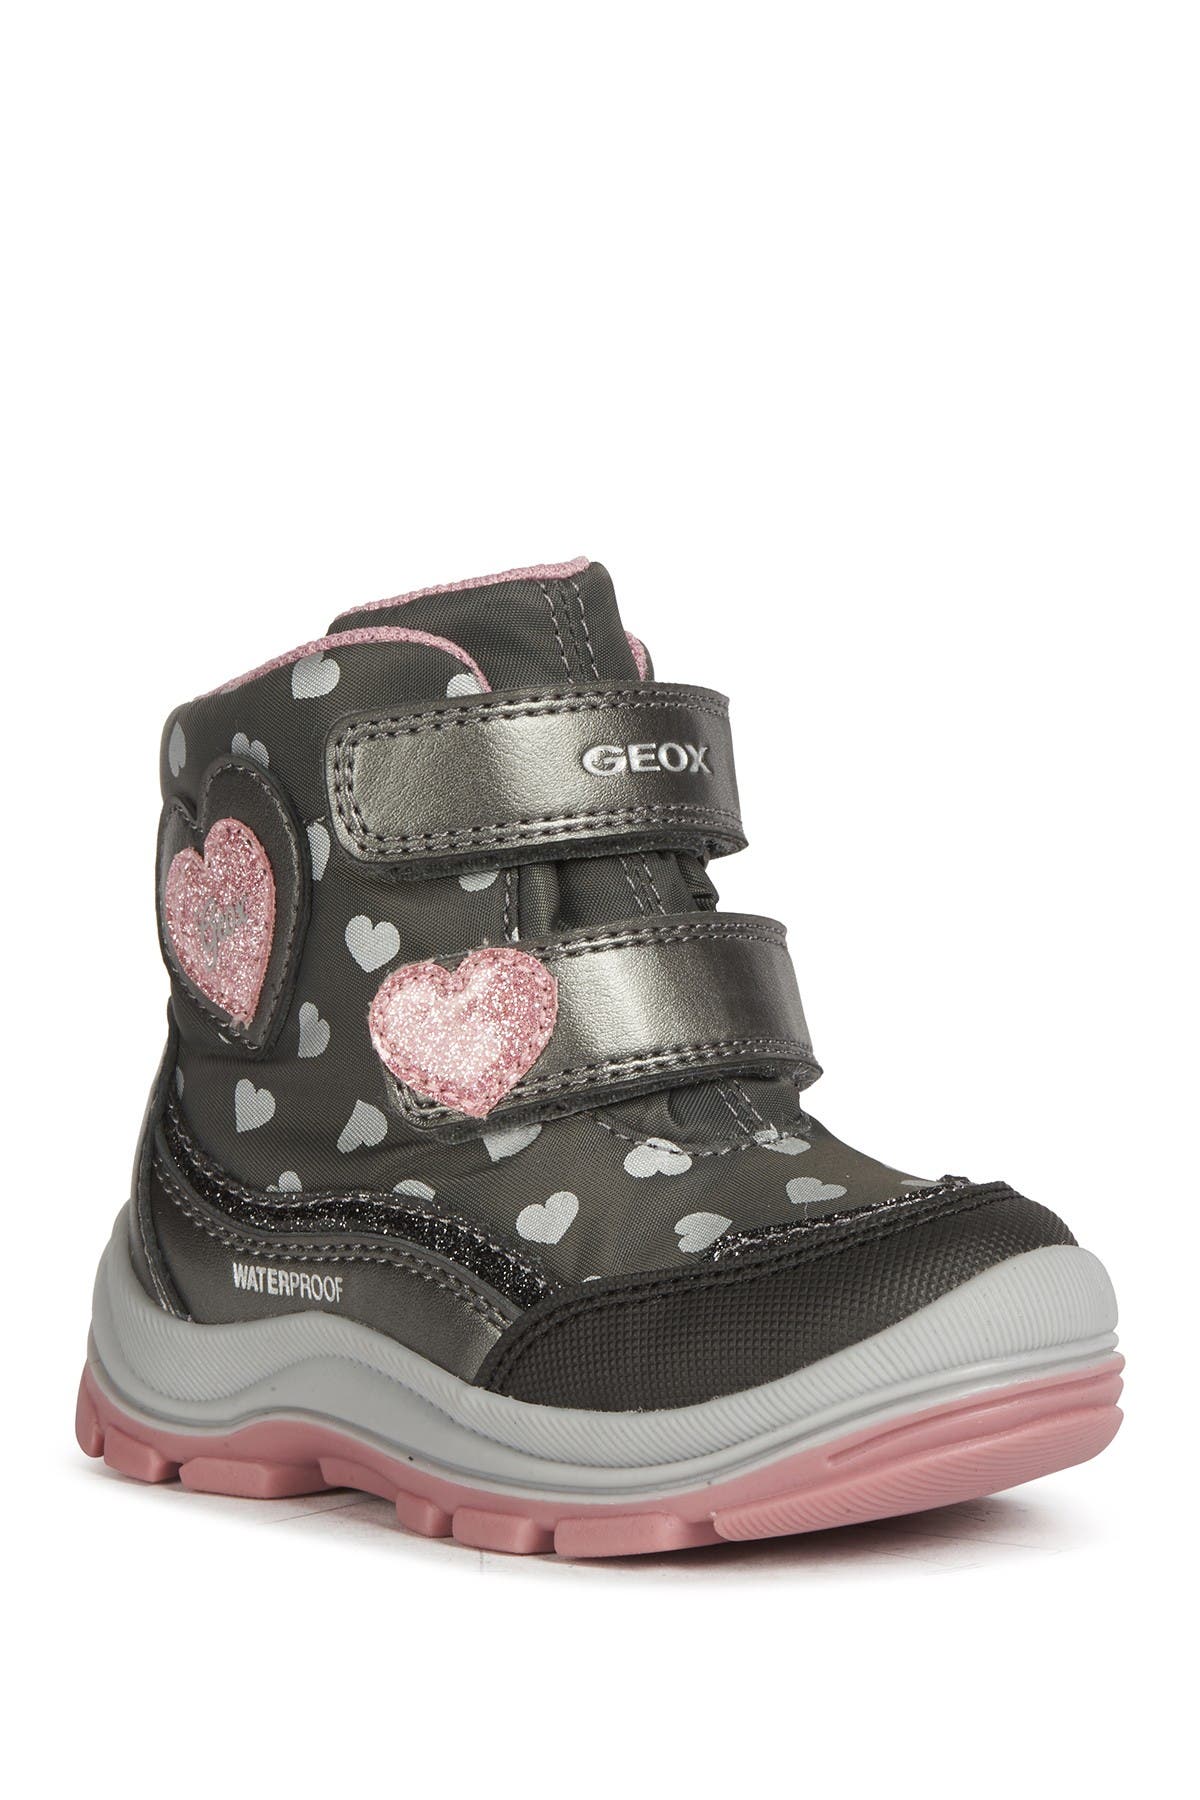 GEOX Kids' Girls' Shoes | Nordstrom Rack